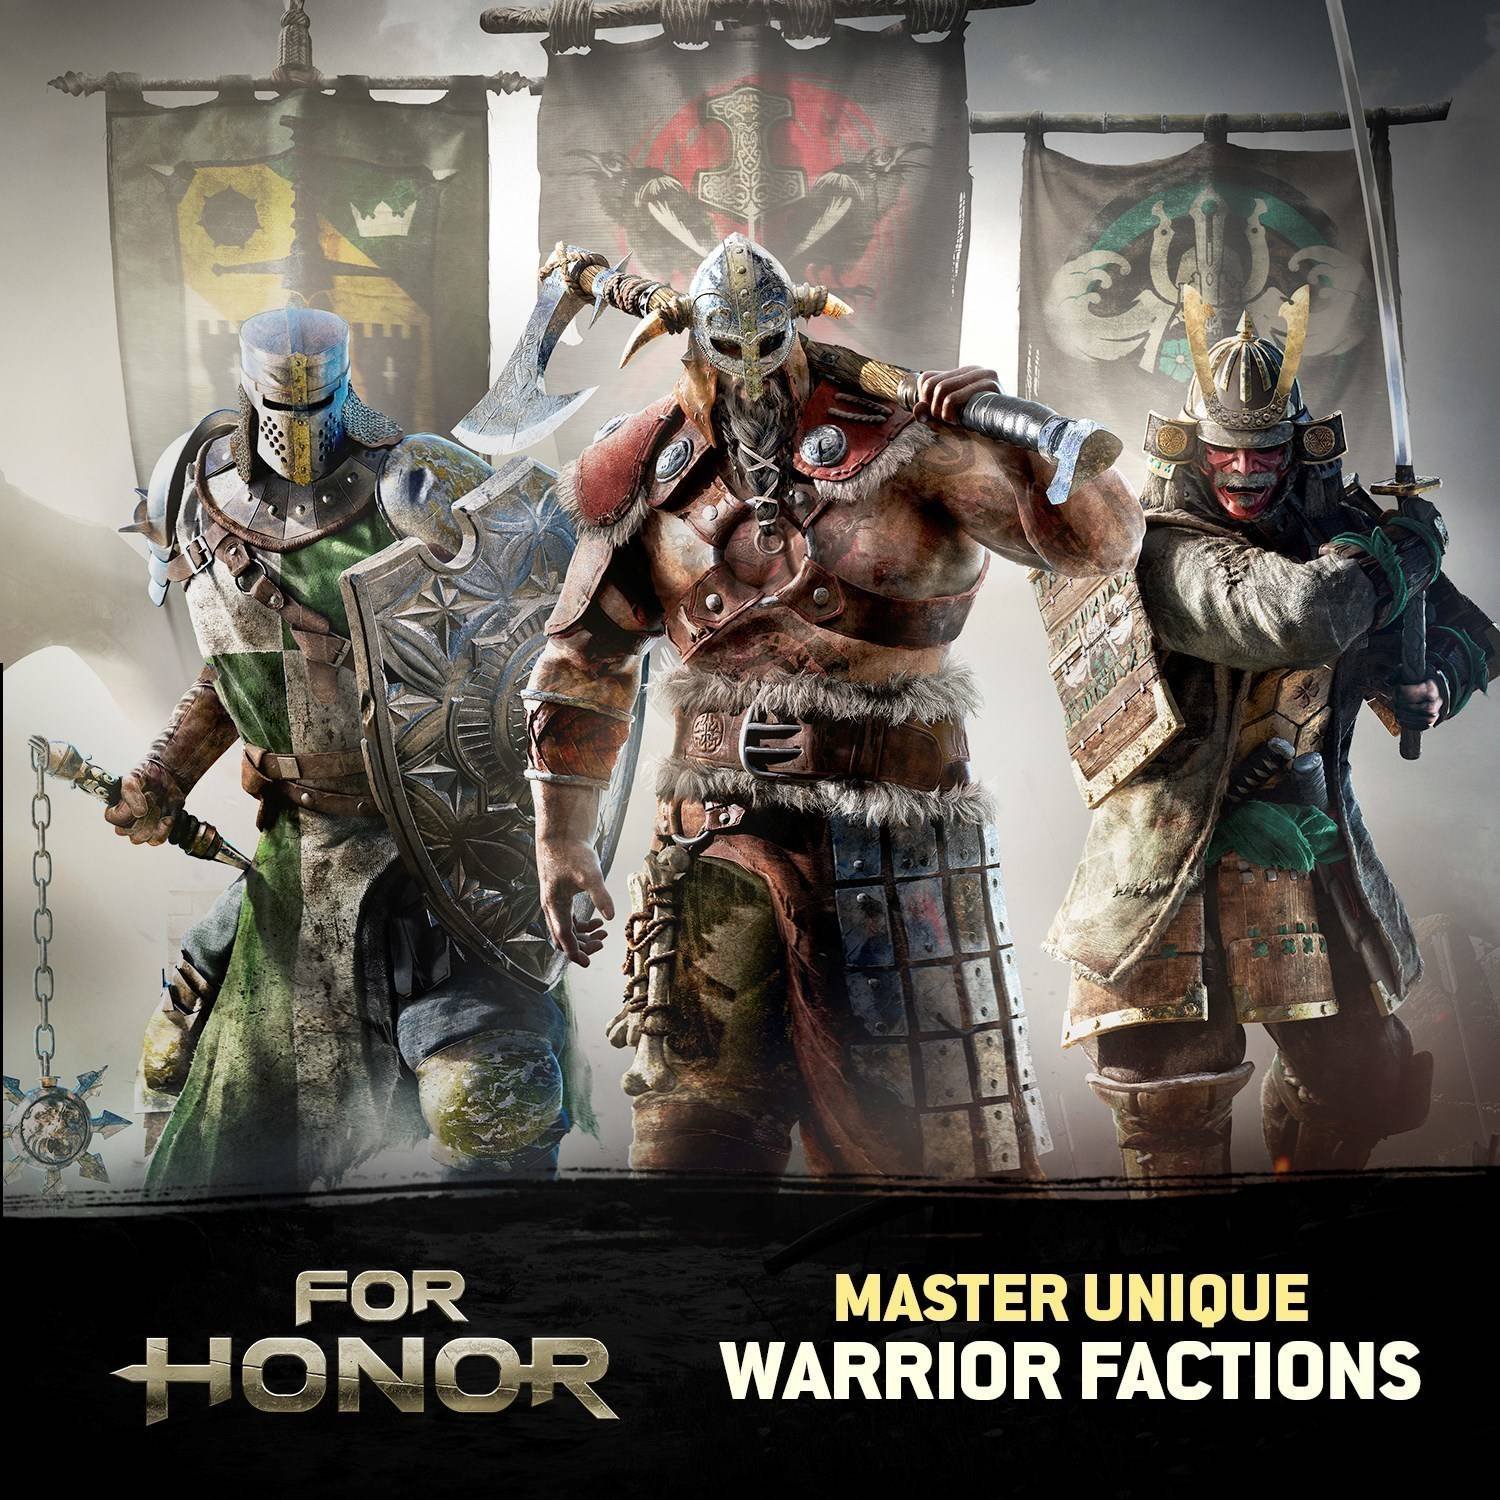 for, Honor, Game, Video, 1fhonor, Action, Artwork, Battle, Fantasy, Fighting, Knight, Medieval, Samurai, Ubisoft, Viking, Warrior Wallpaper